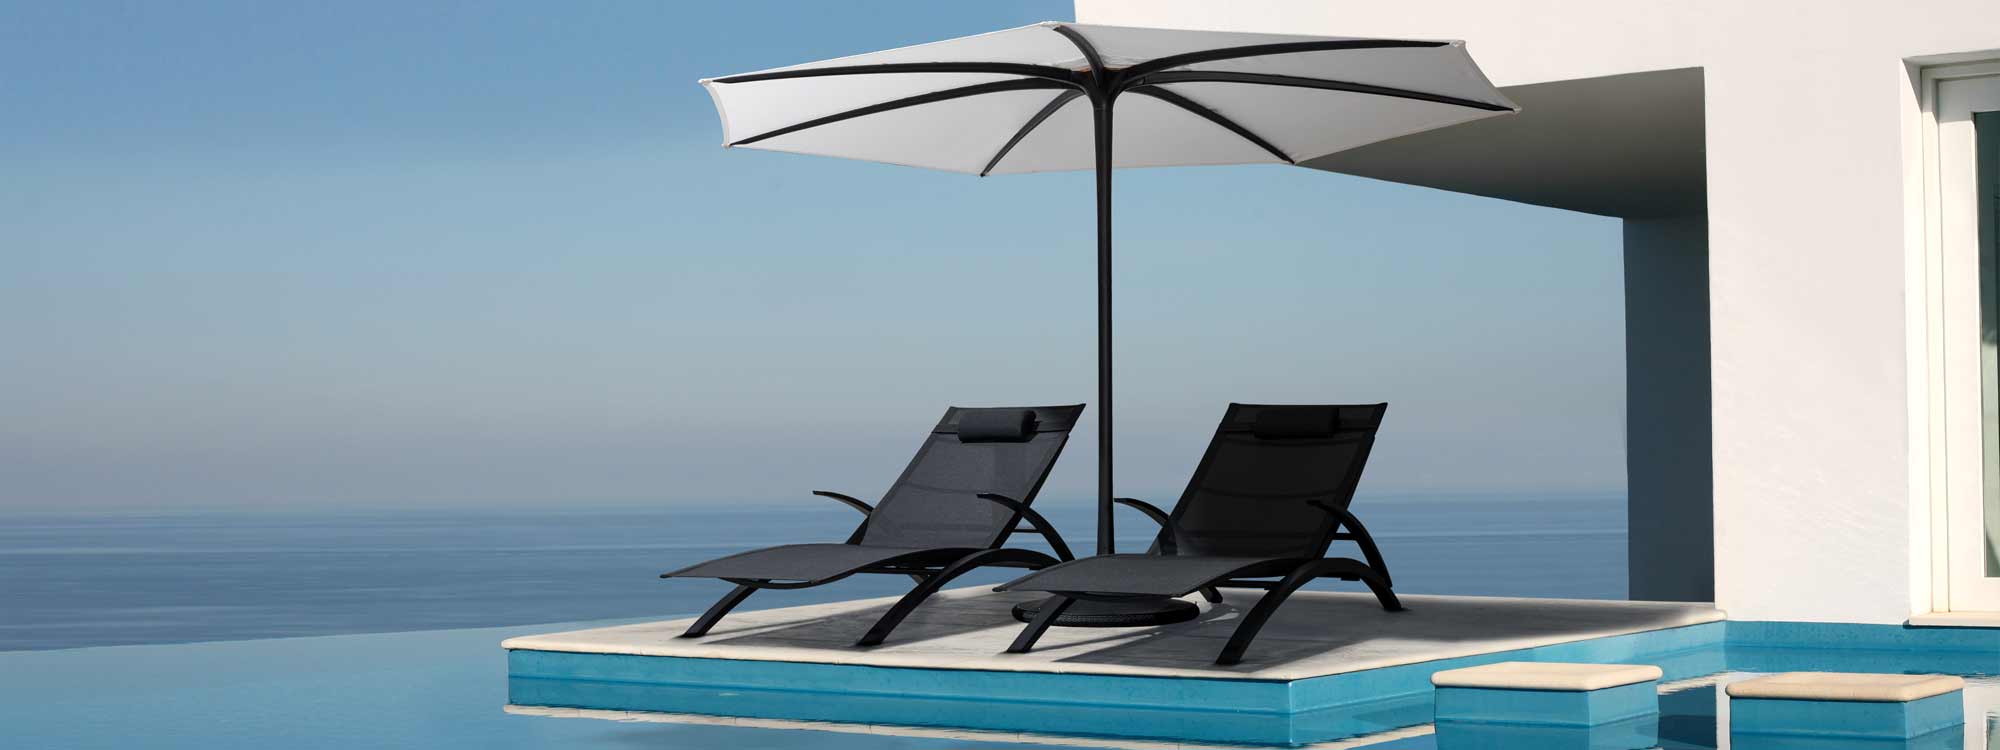 Image of Royal Botania Palma parasol & black OZON loungers next to horizon swimming pool.